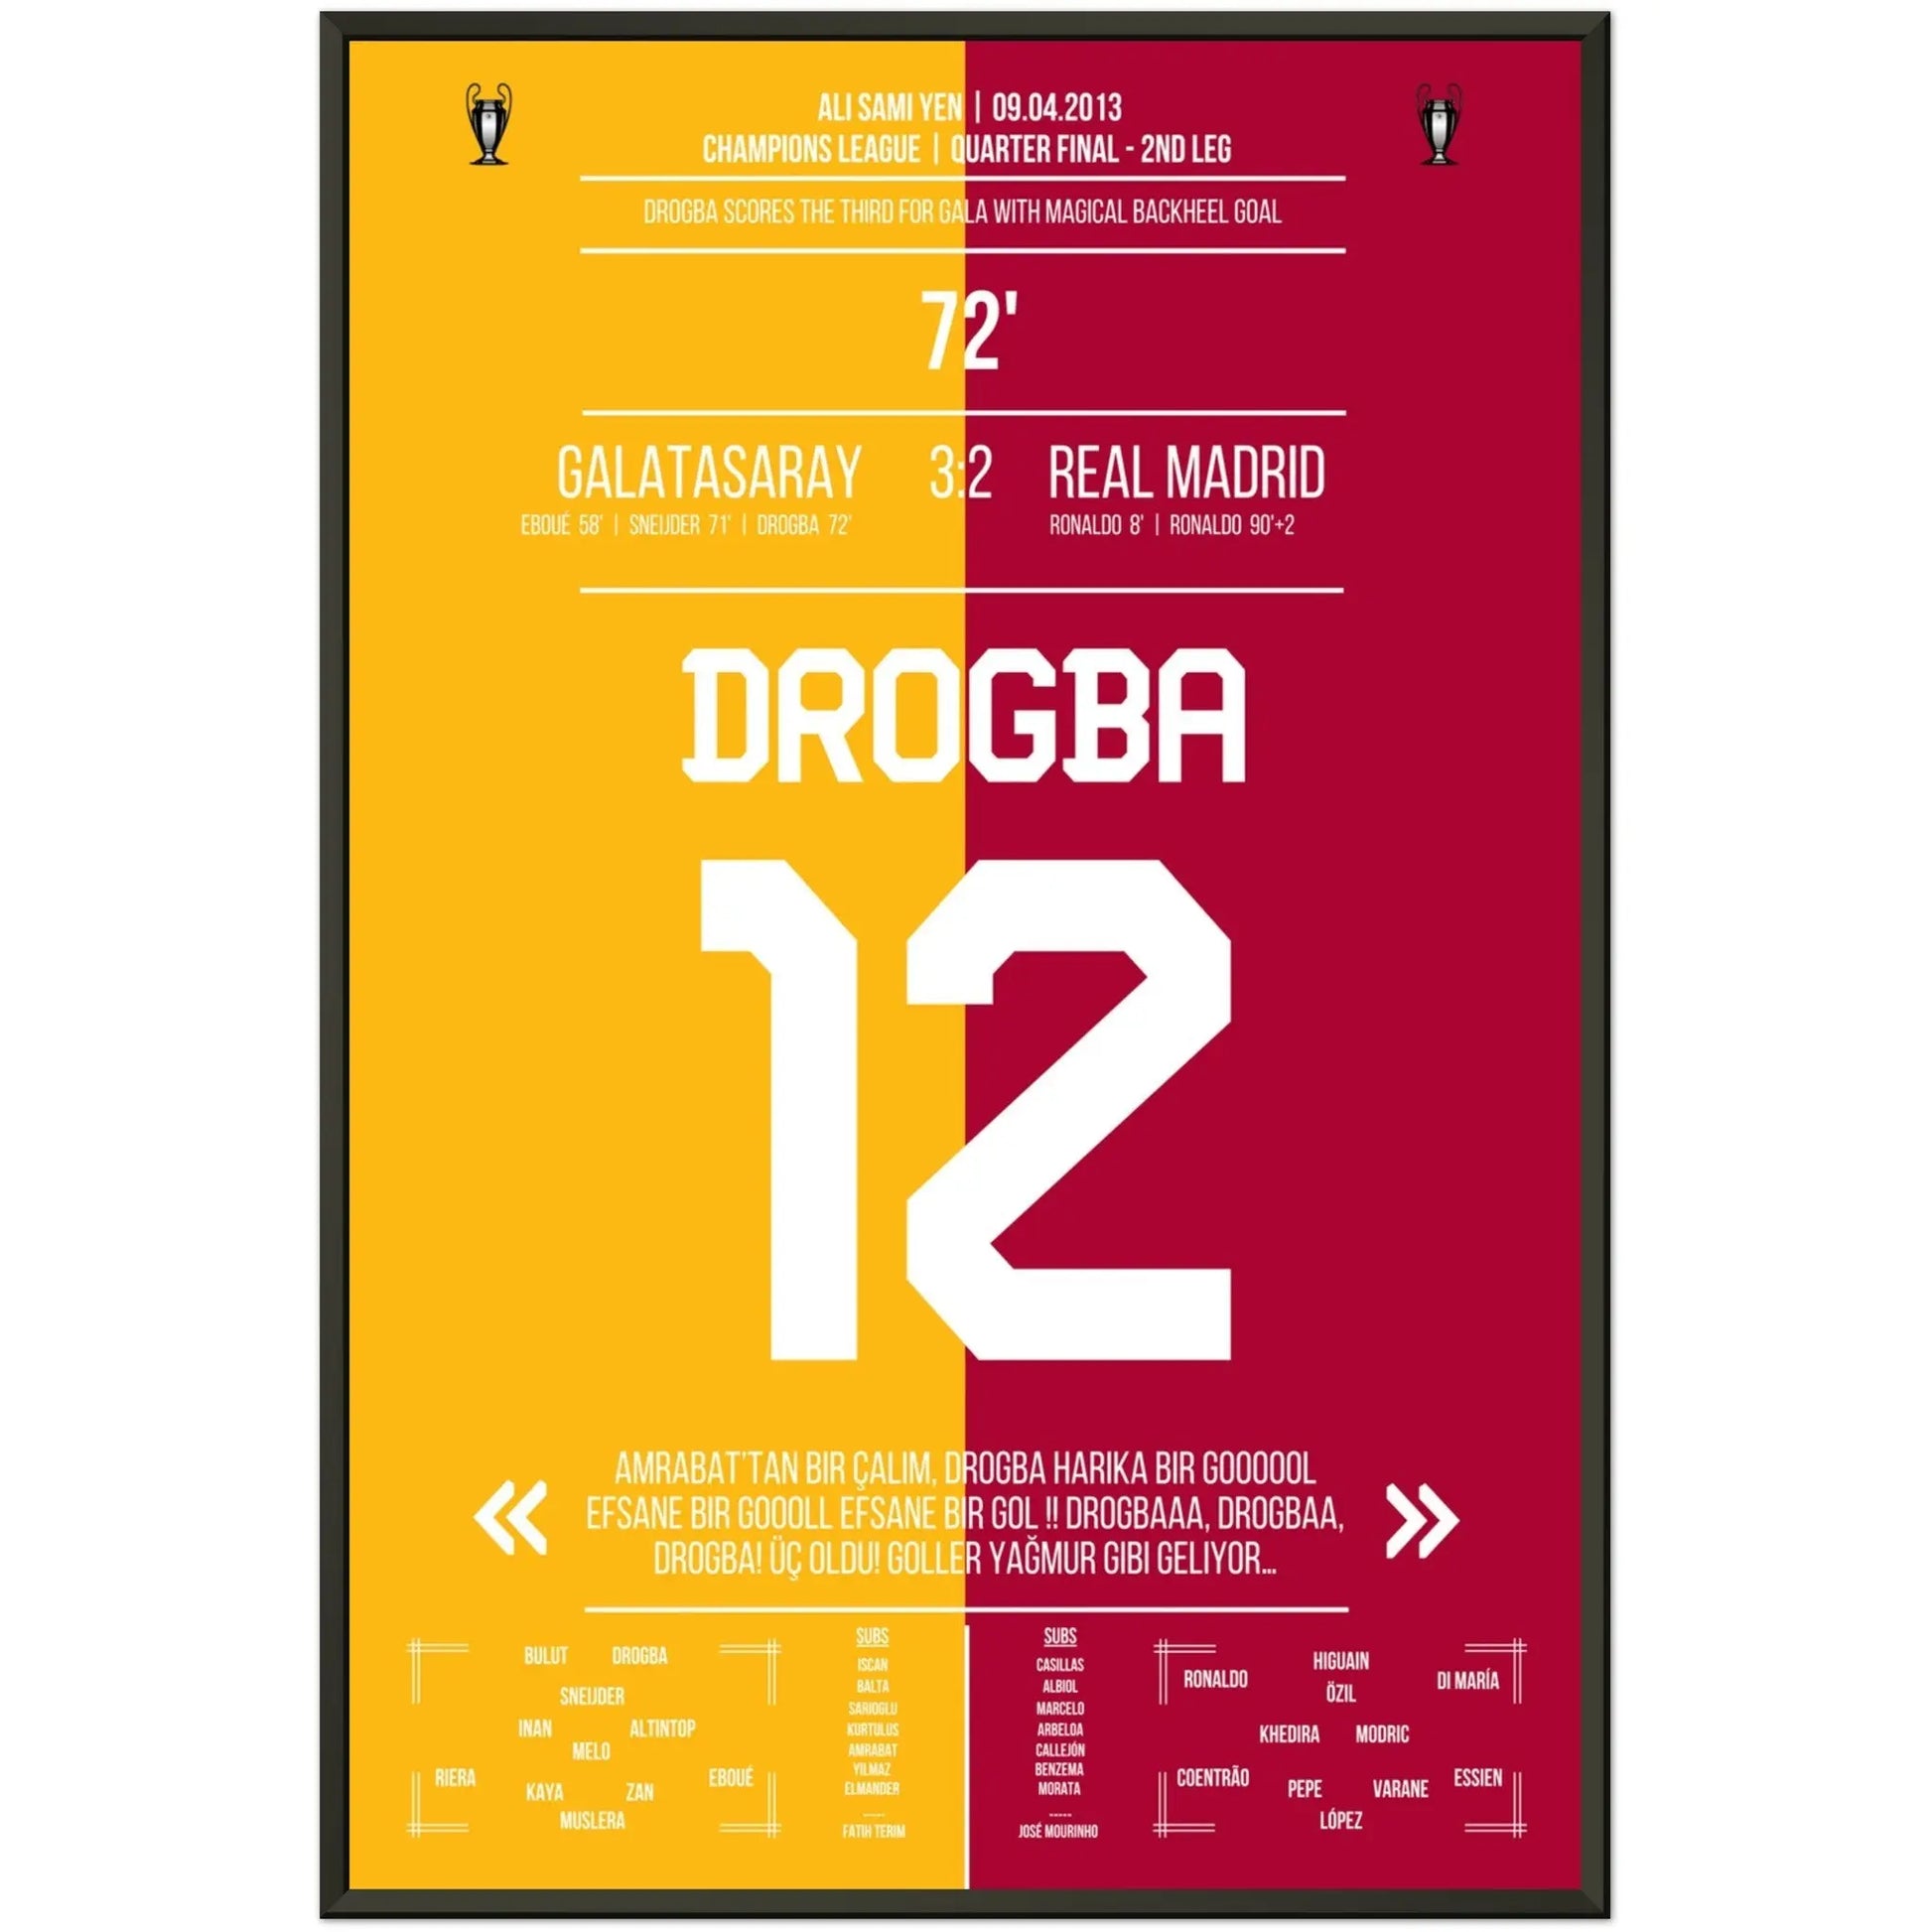 Drogbas Tor gegen Real im Champions League Viertelfinale 2013 